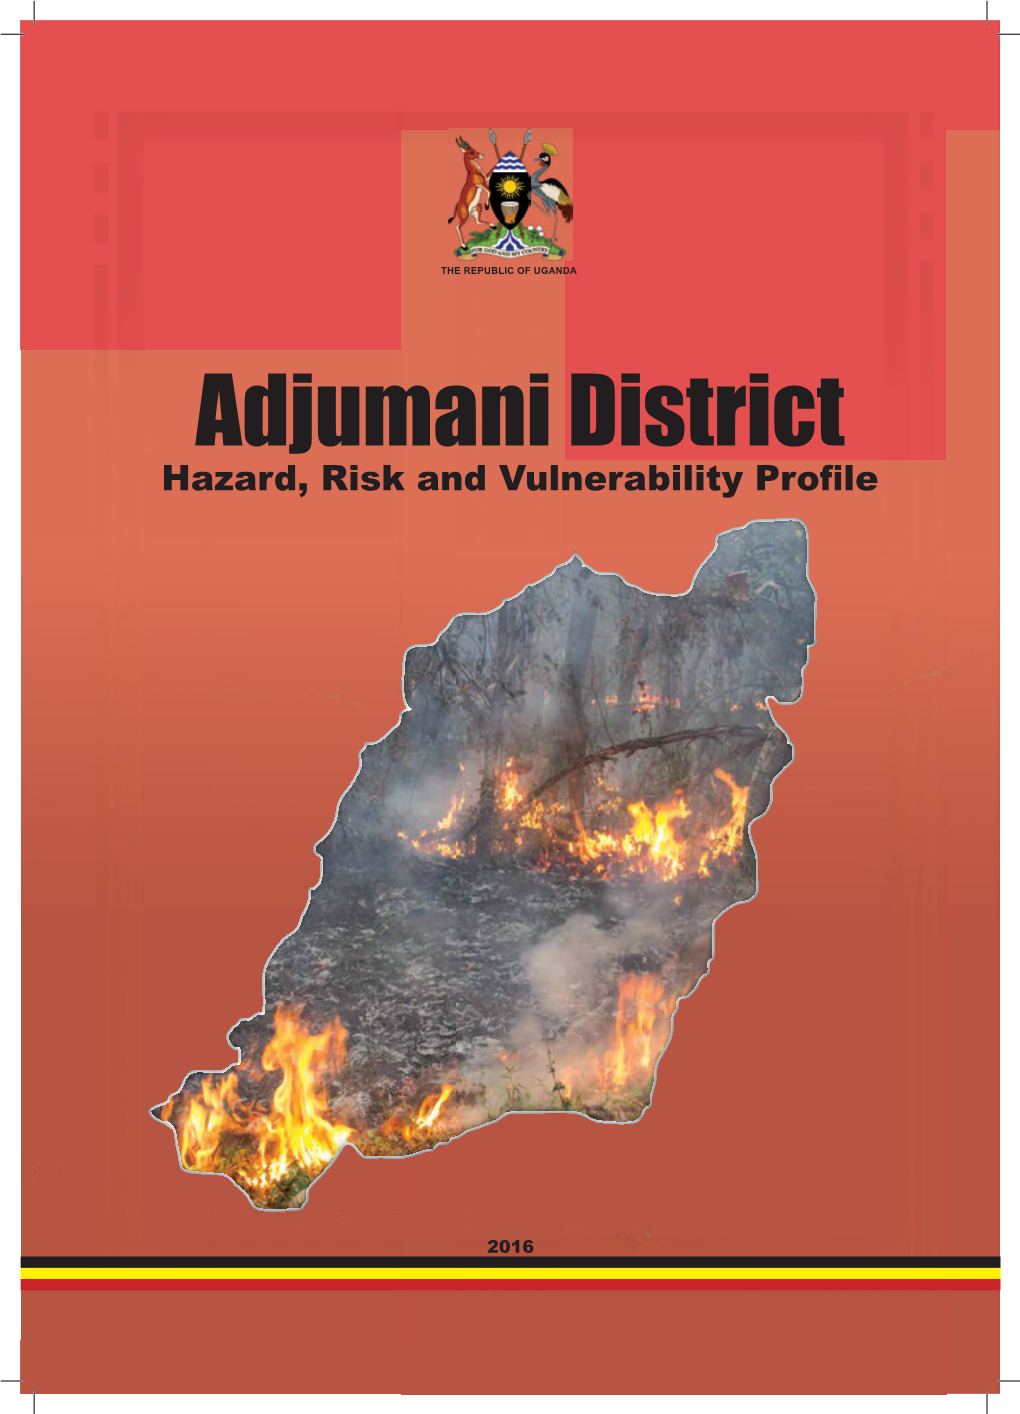 Adjumani District HRV Profile.Pdf